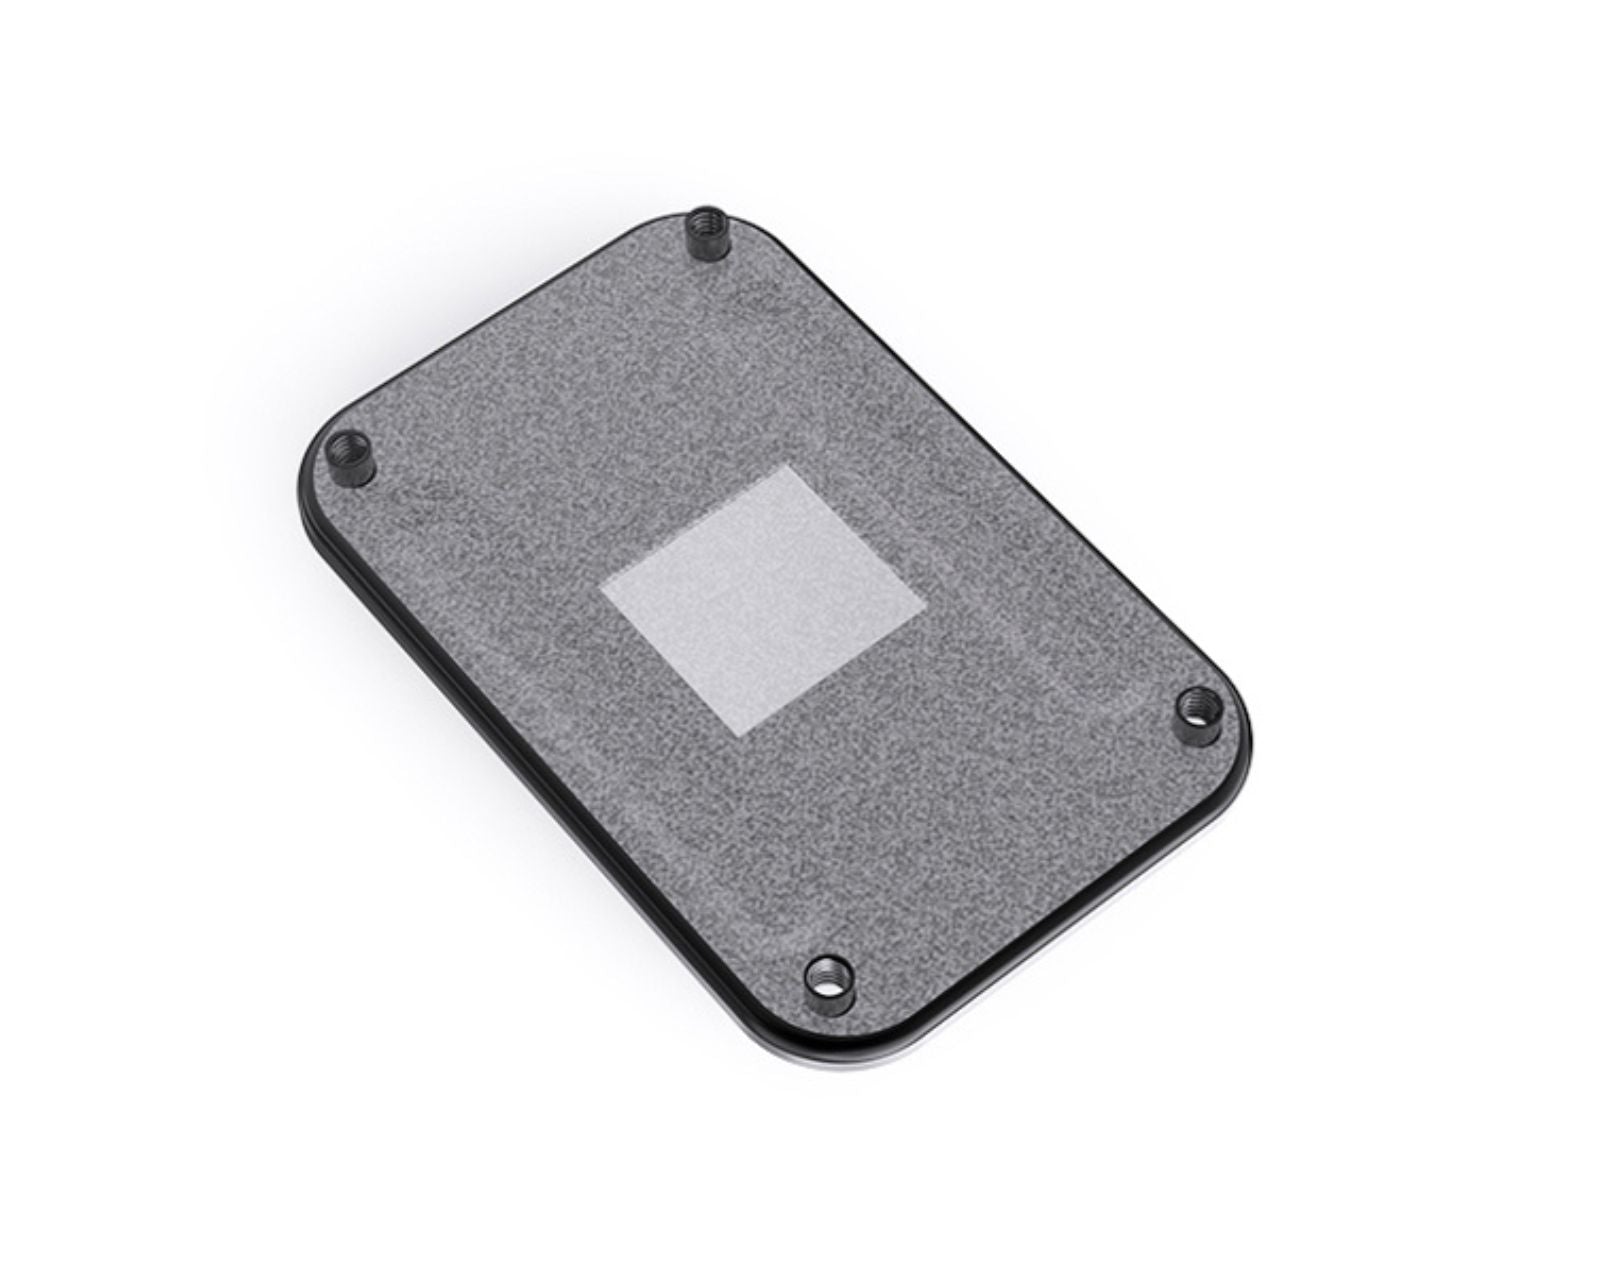 Bykski Premium Backplate For AMD Ryzen CPUs - Socket AM4 Compatibility (B-AM4-BE-632)